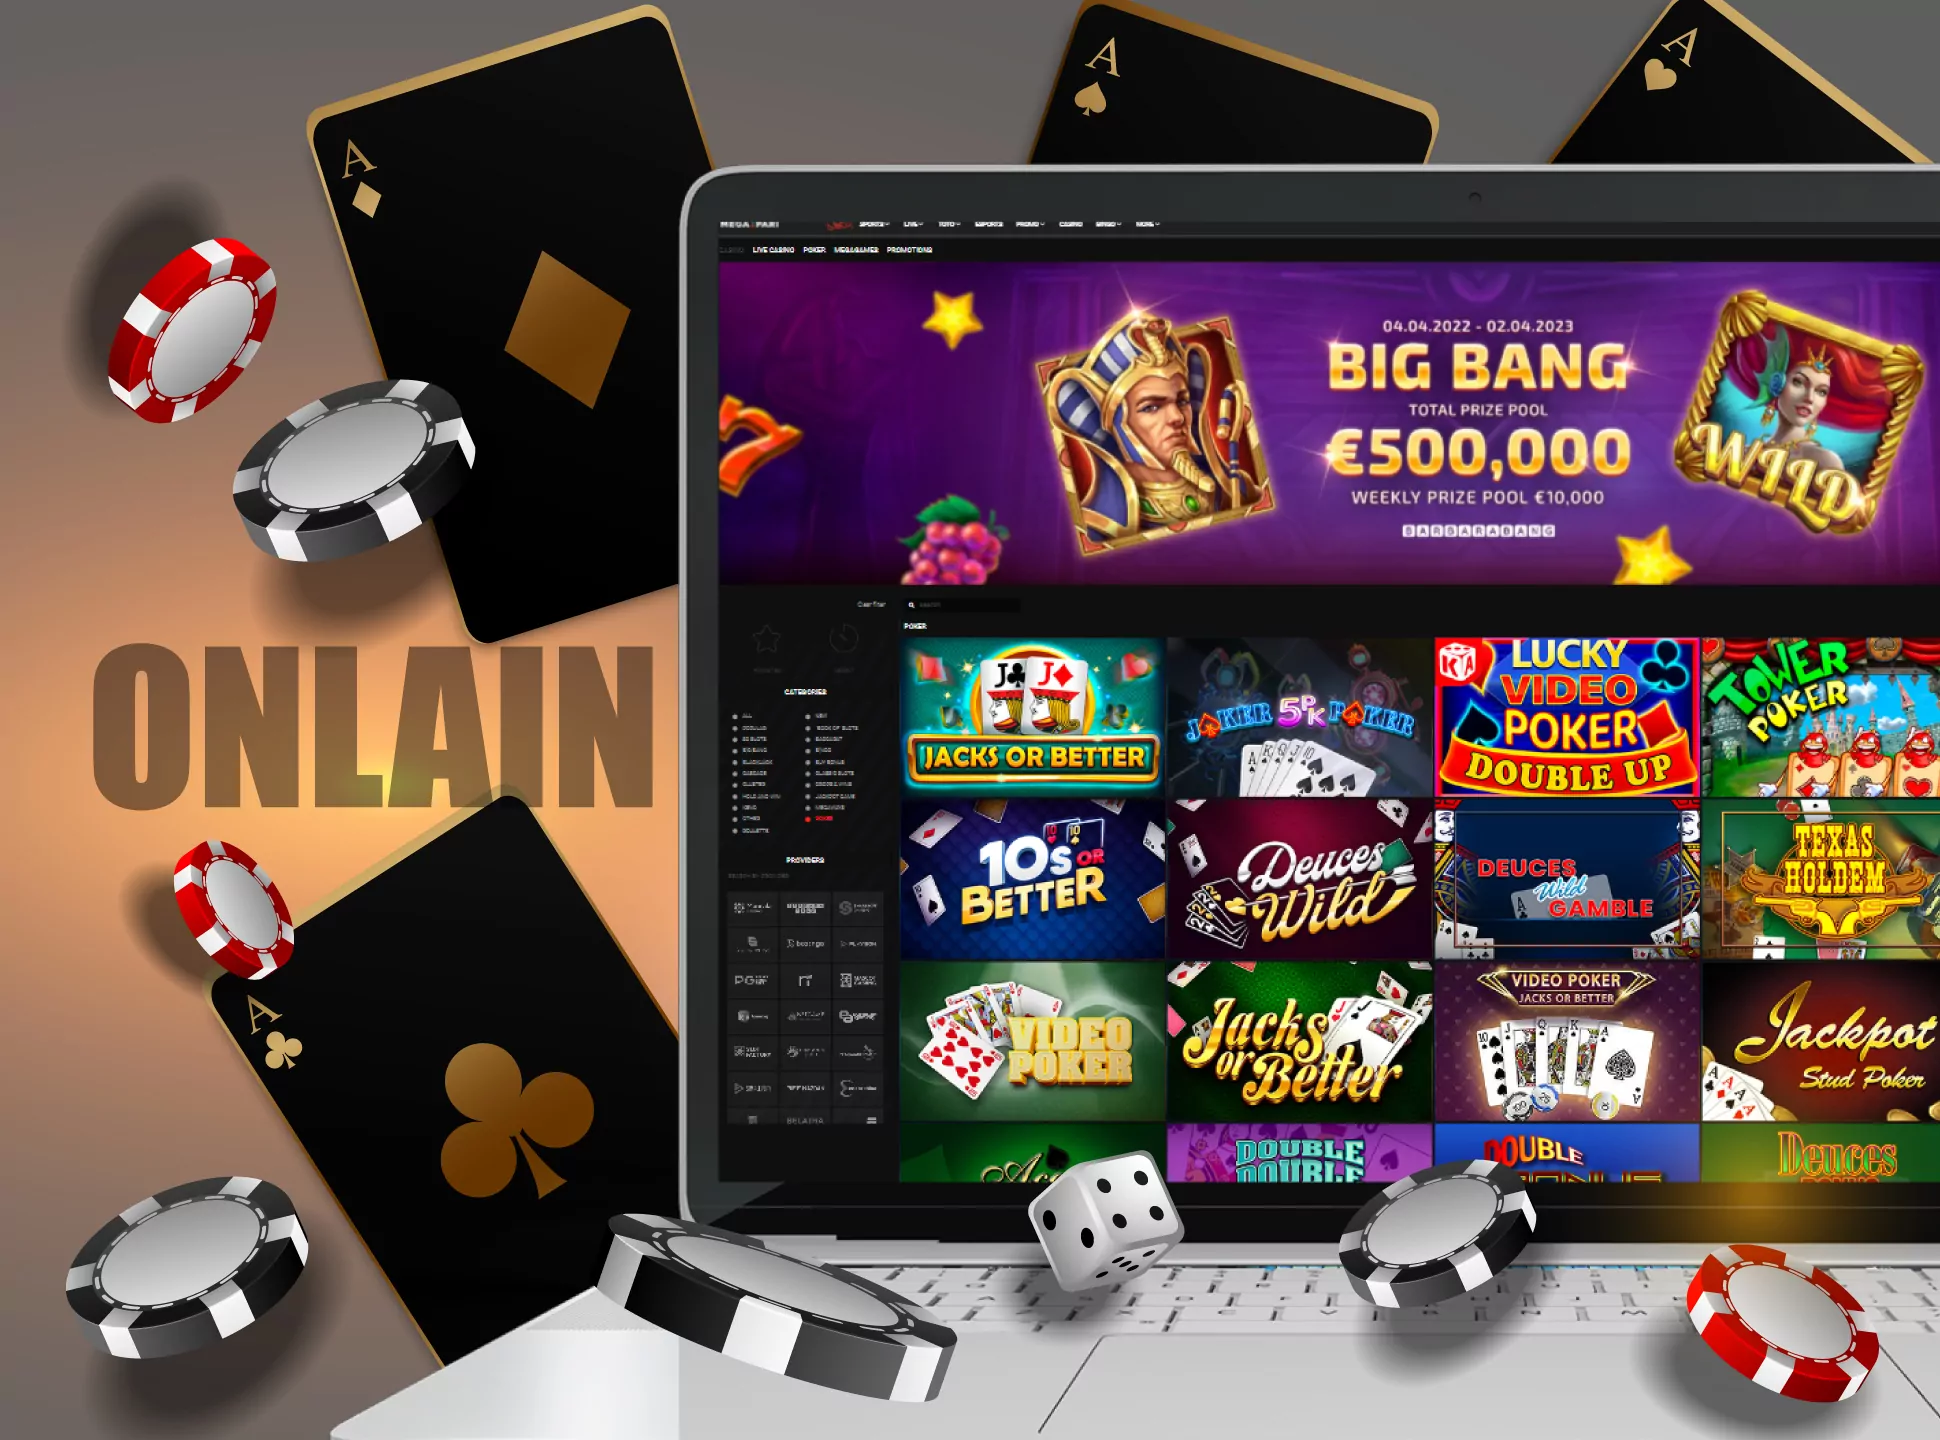 Play online poker in the casino app.